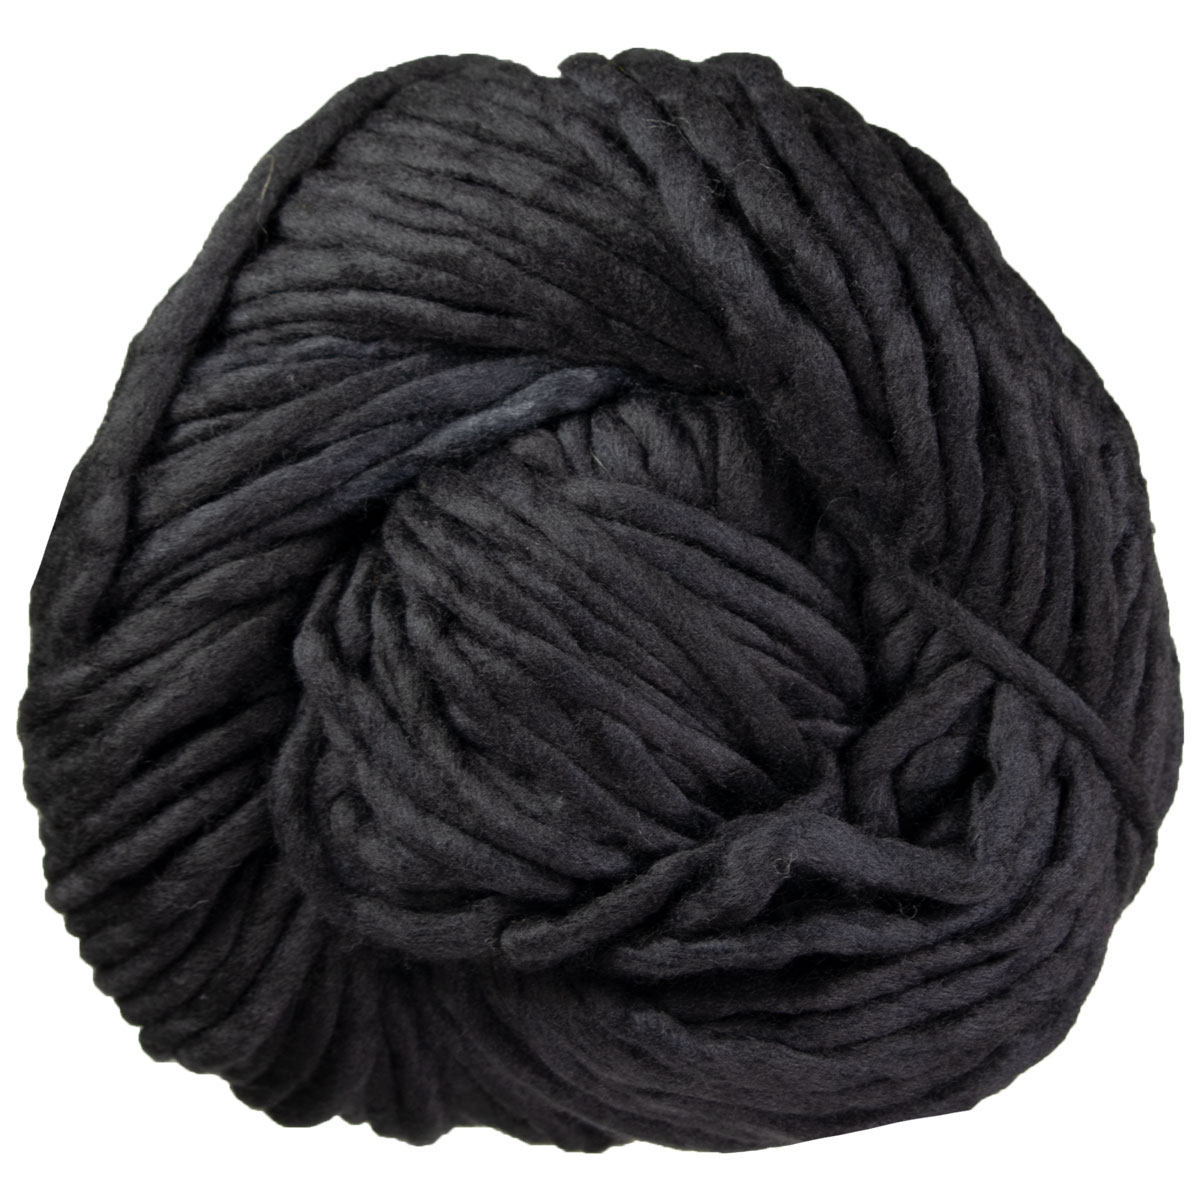 Malabrigo Rasta Super Bulky Merino Knitting Yarn Wool 150g 69 Pearl Ten